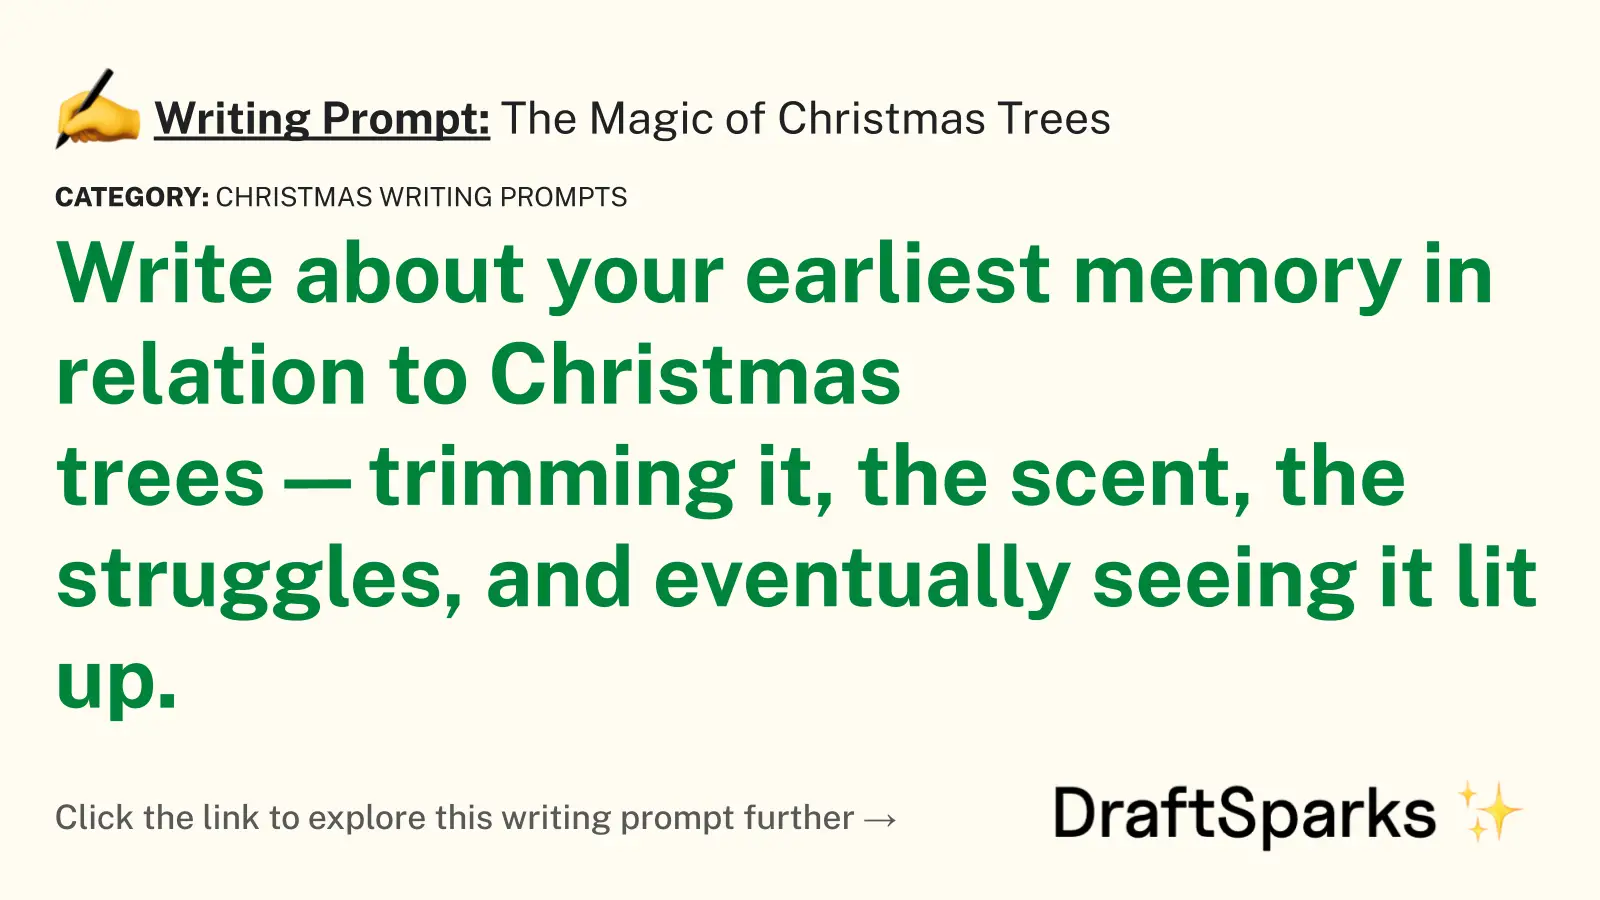 The Magic of Christmas Trees